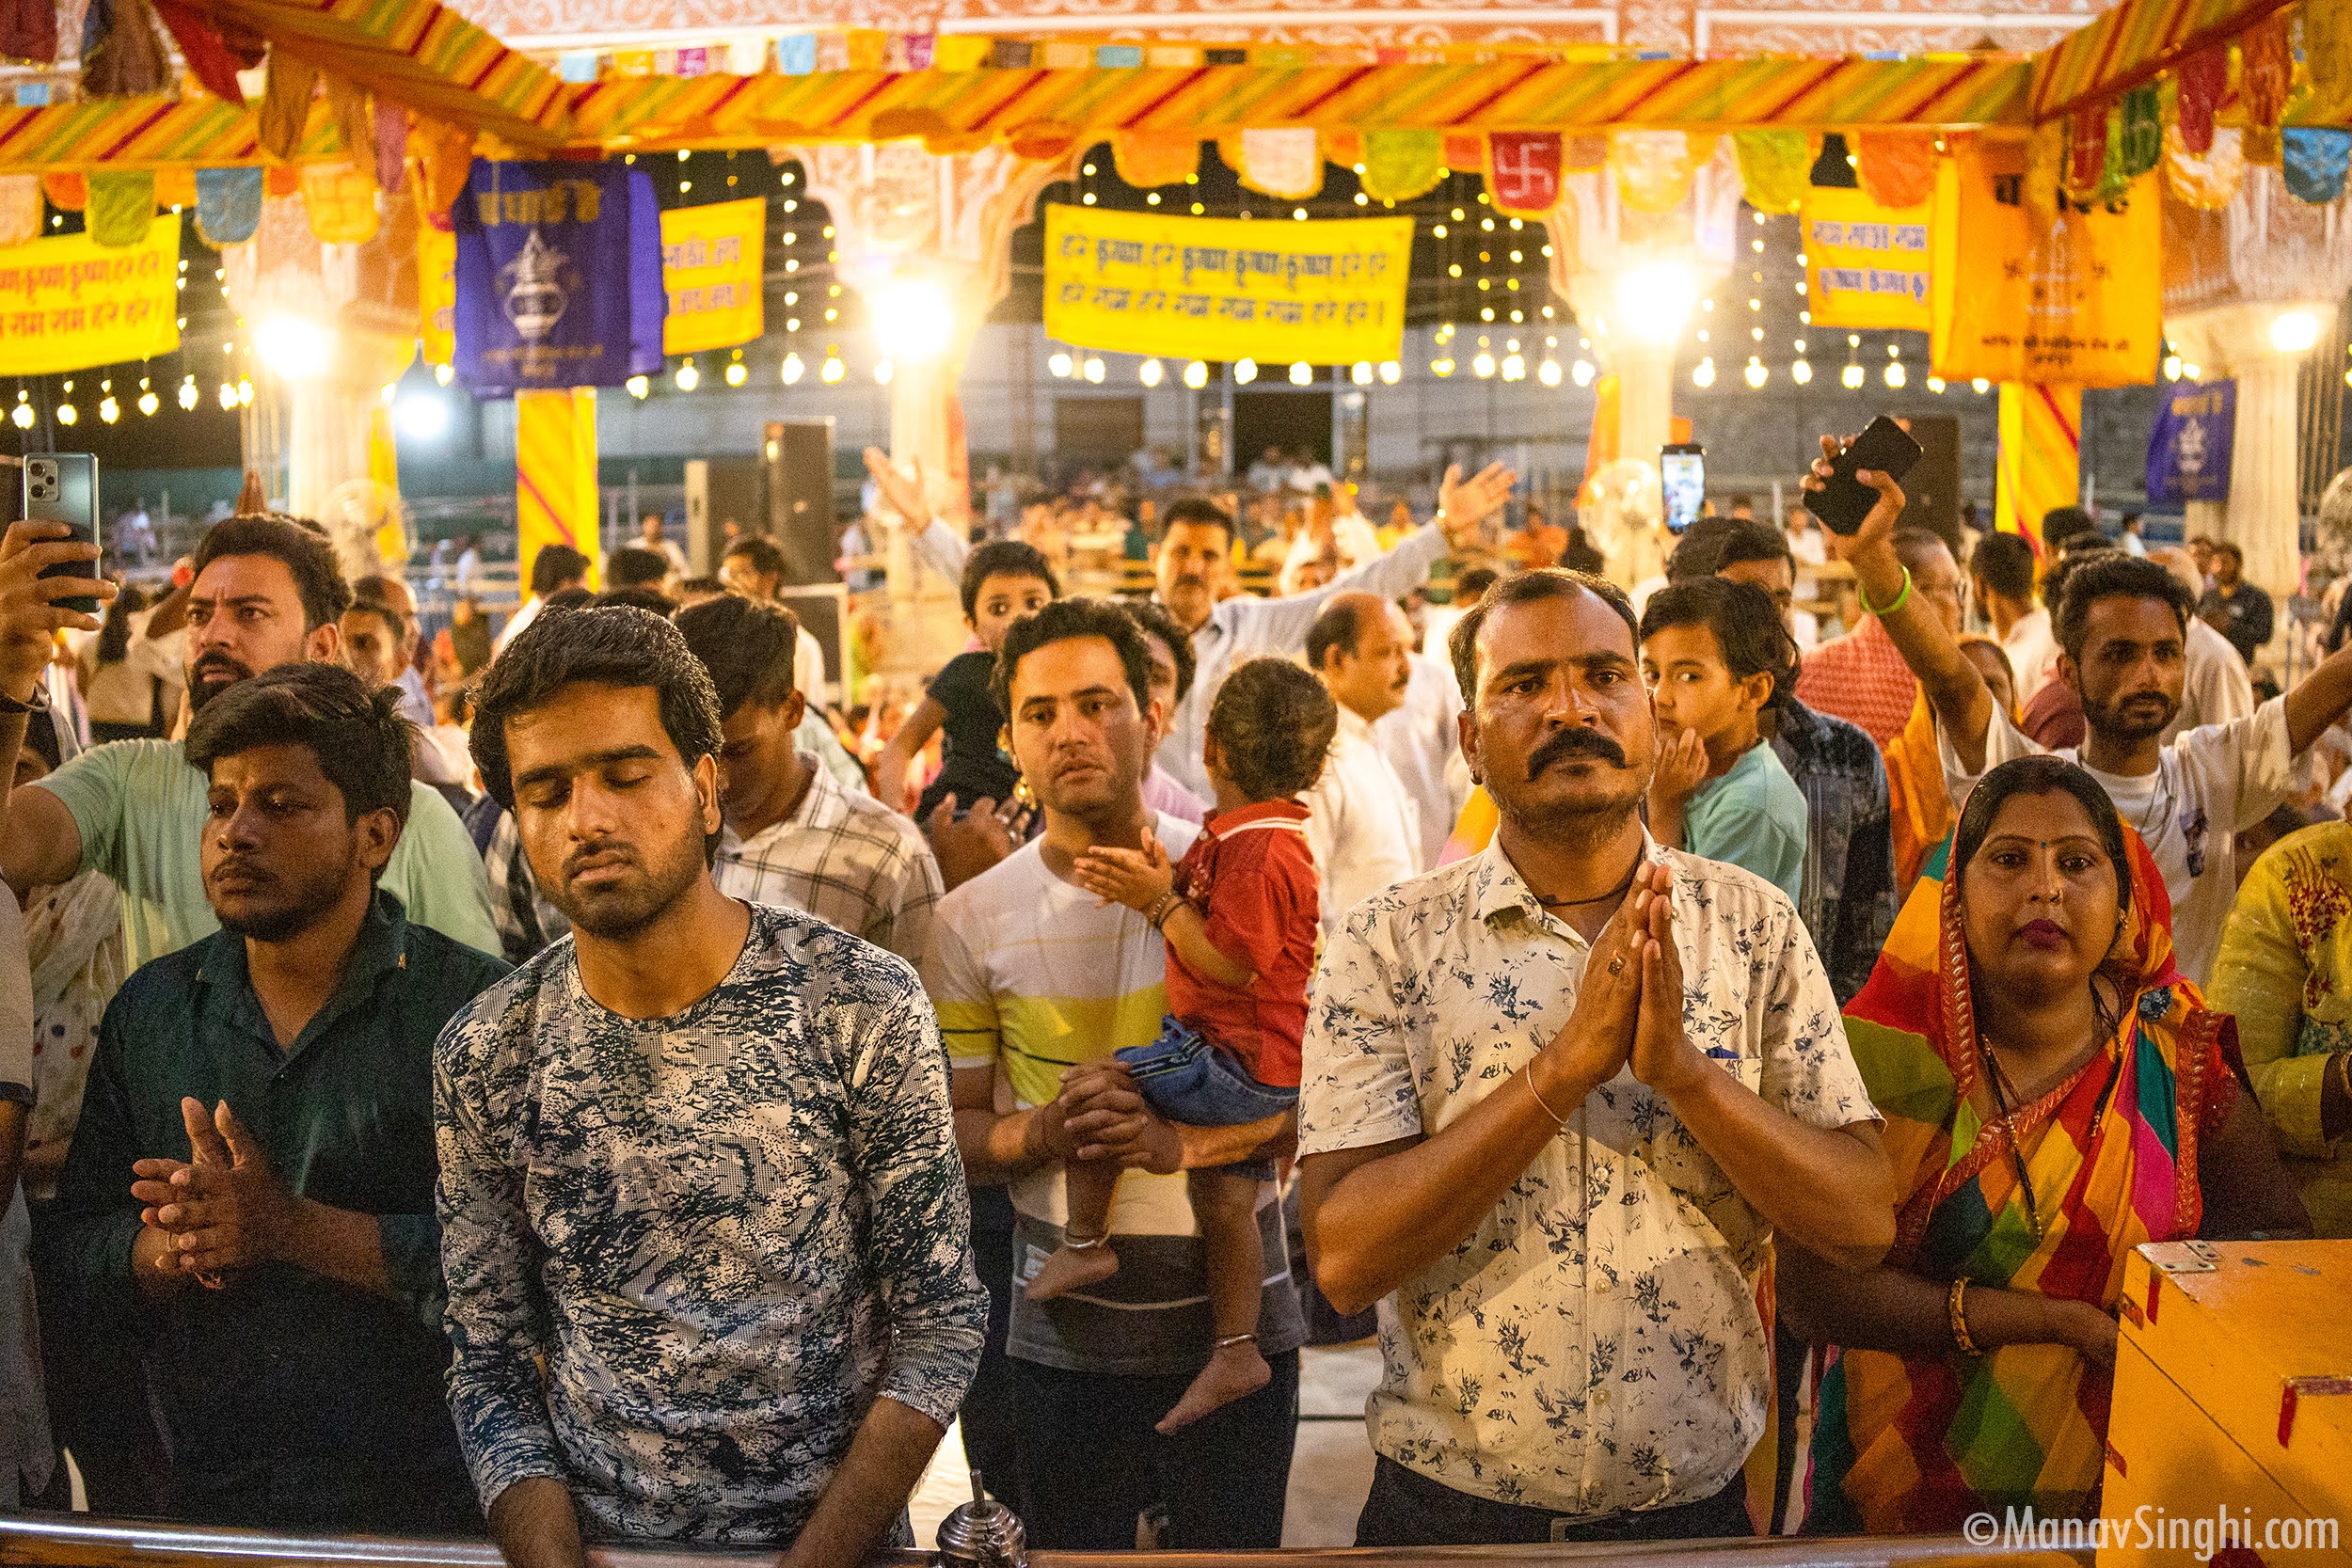 Devotees Praying at Shri Krishna Janmashtami Mahotsav, Govind Devji Temple, Jaipur.